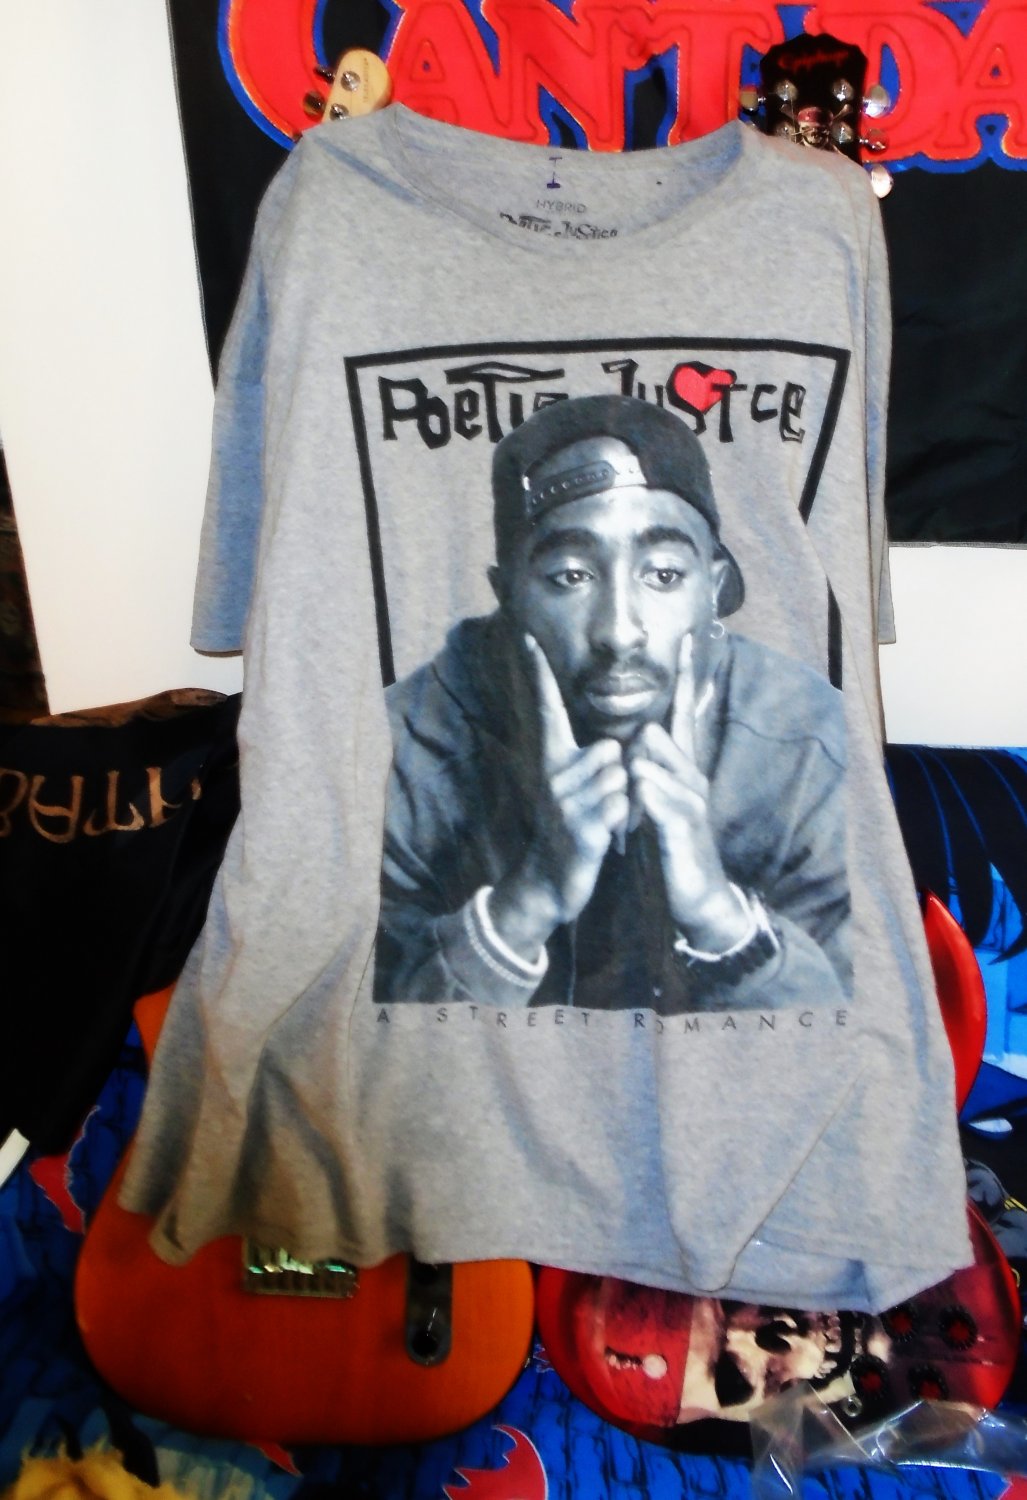 tupac poetic justice 3xl tee - gangsta rap hip hop harlem thug life